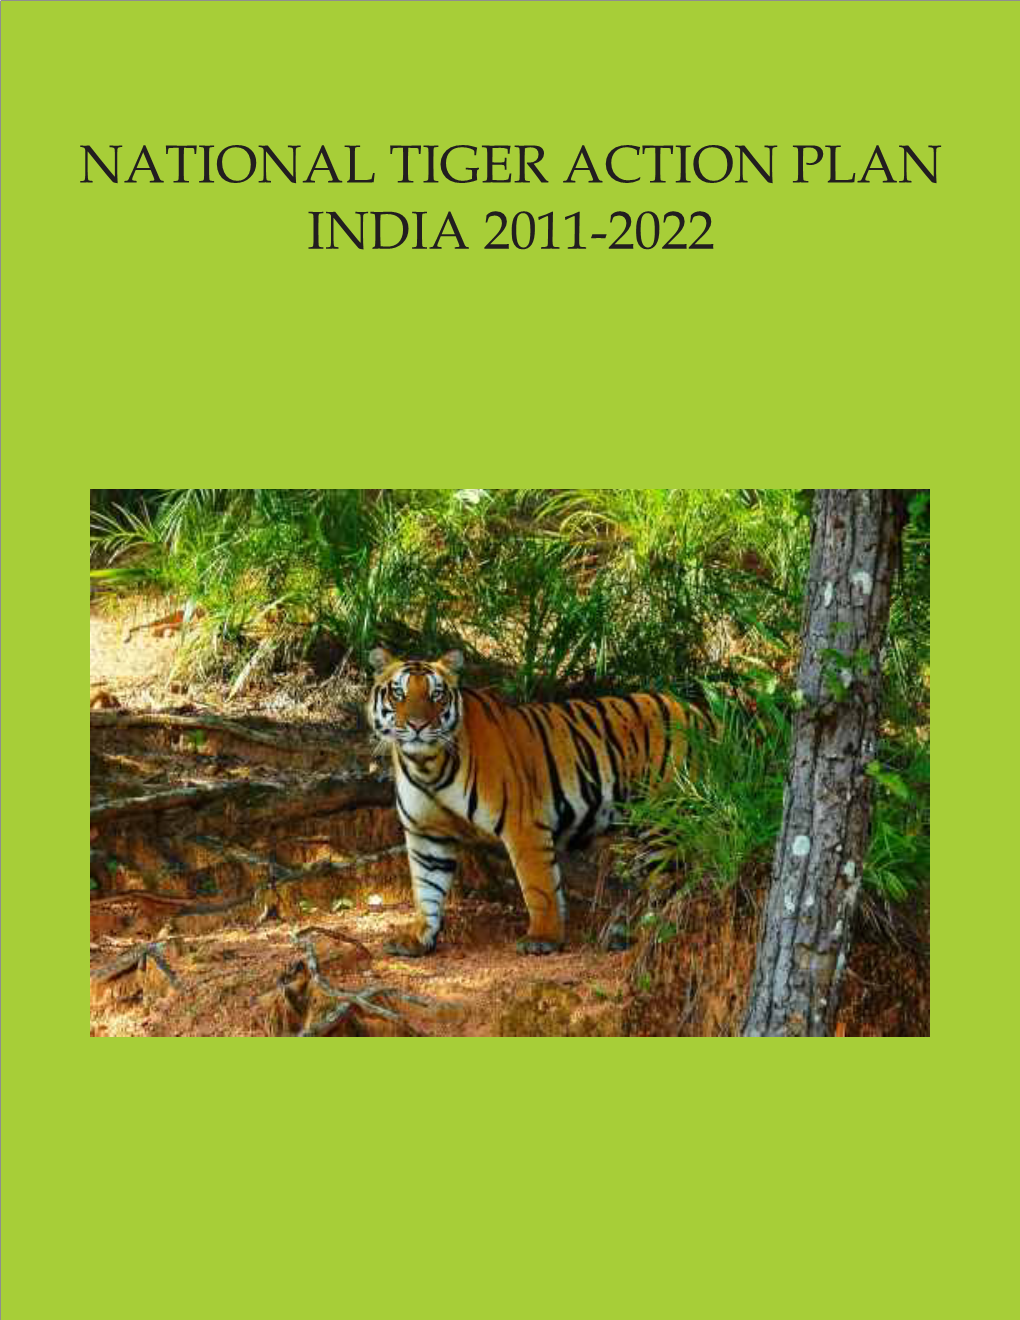 NATIONAL TIGER ACTION PLAN INDIA 2011-2022 134 India Tiger Action Plan 2011-2022